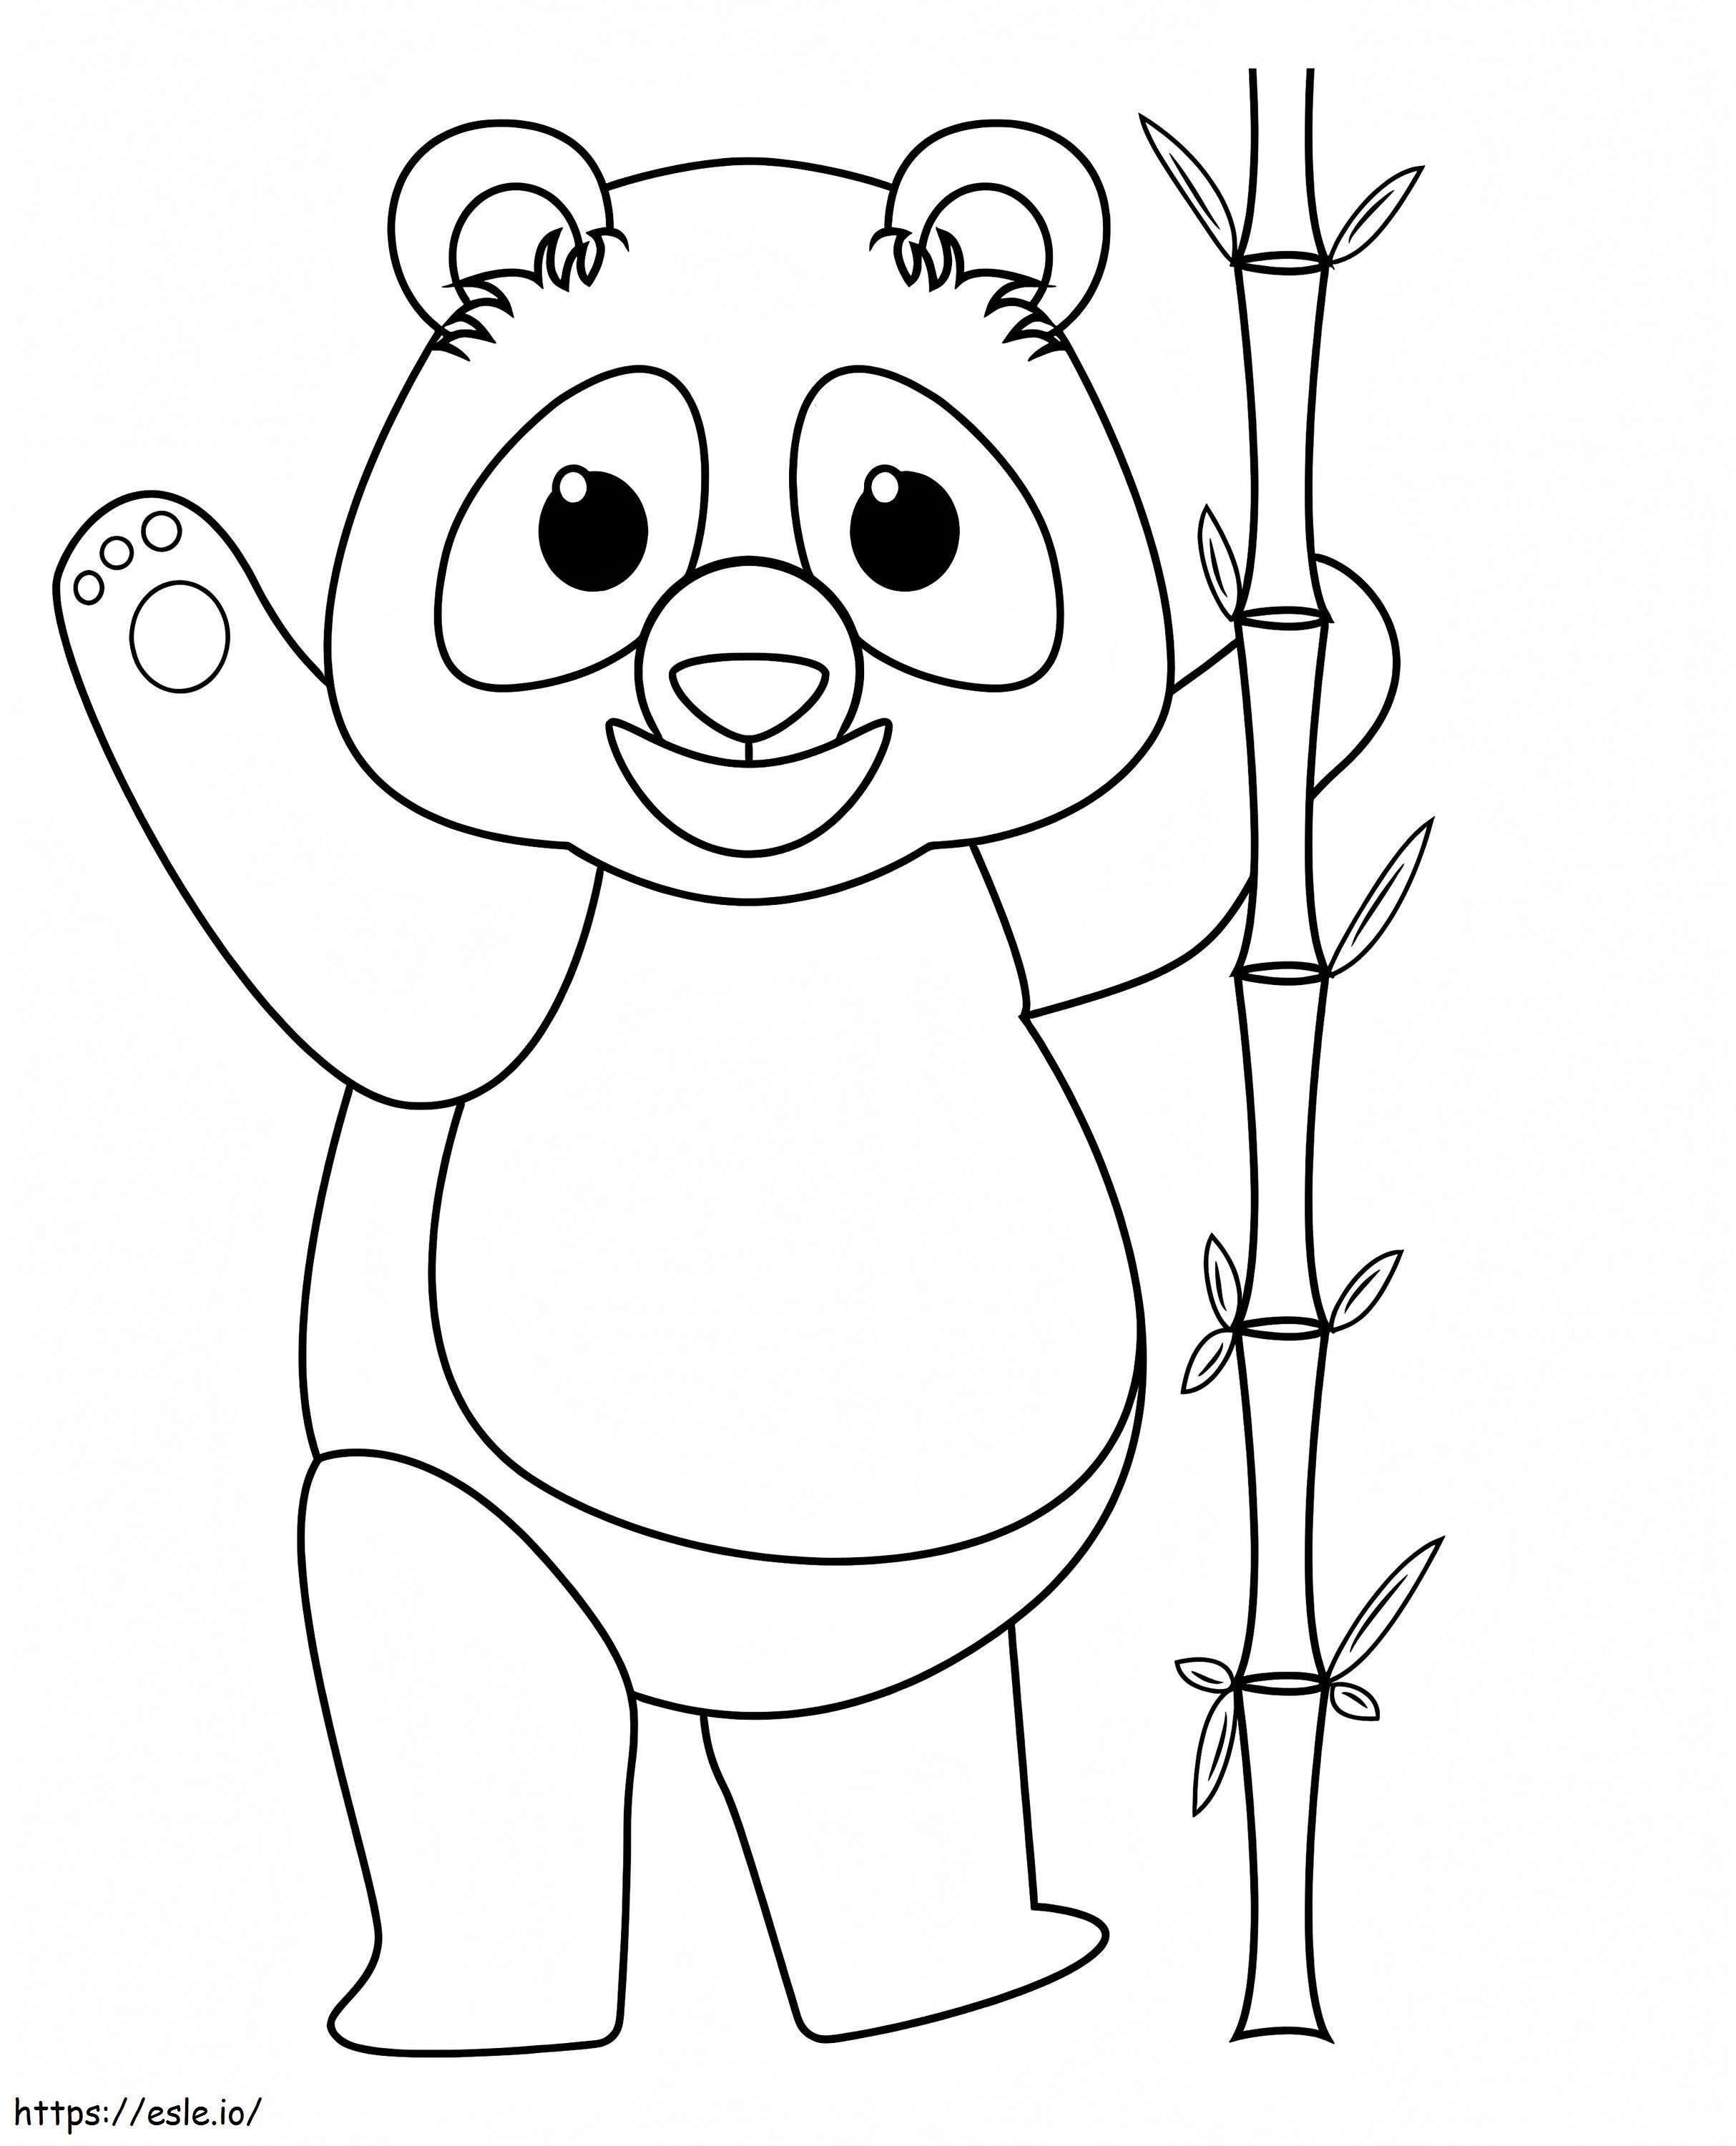 Panda feliz dos desenhos animados para colorir